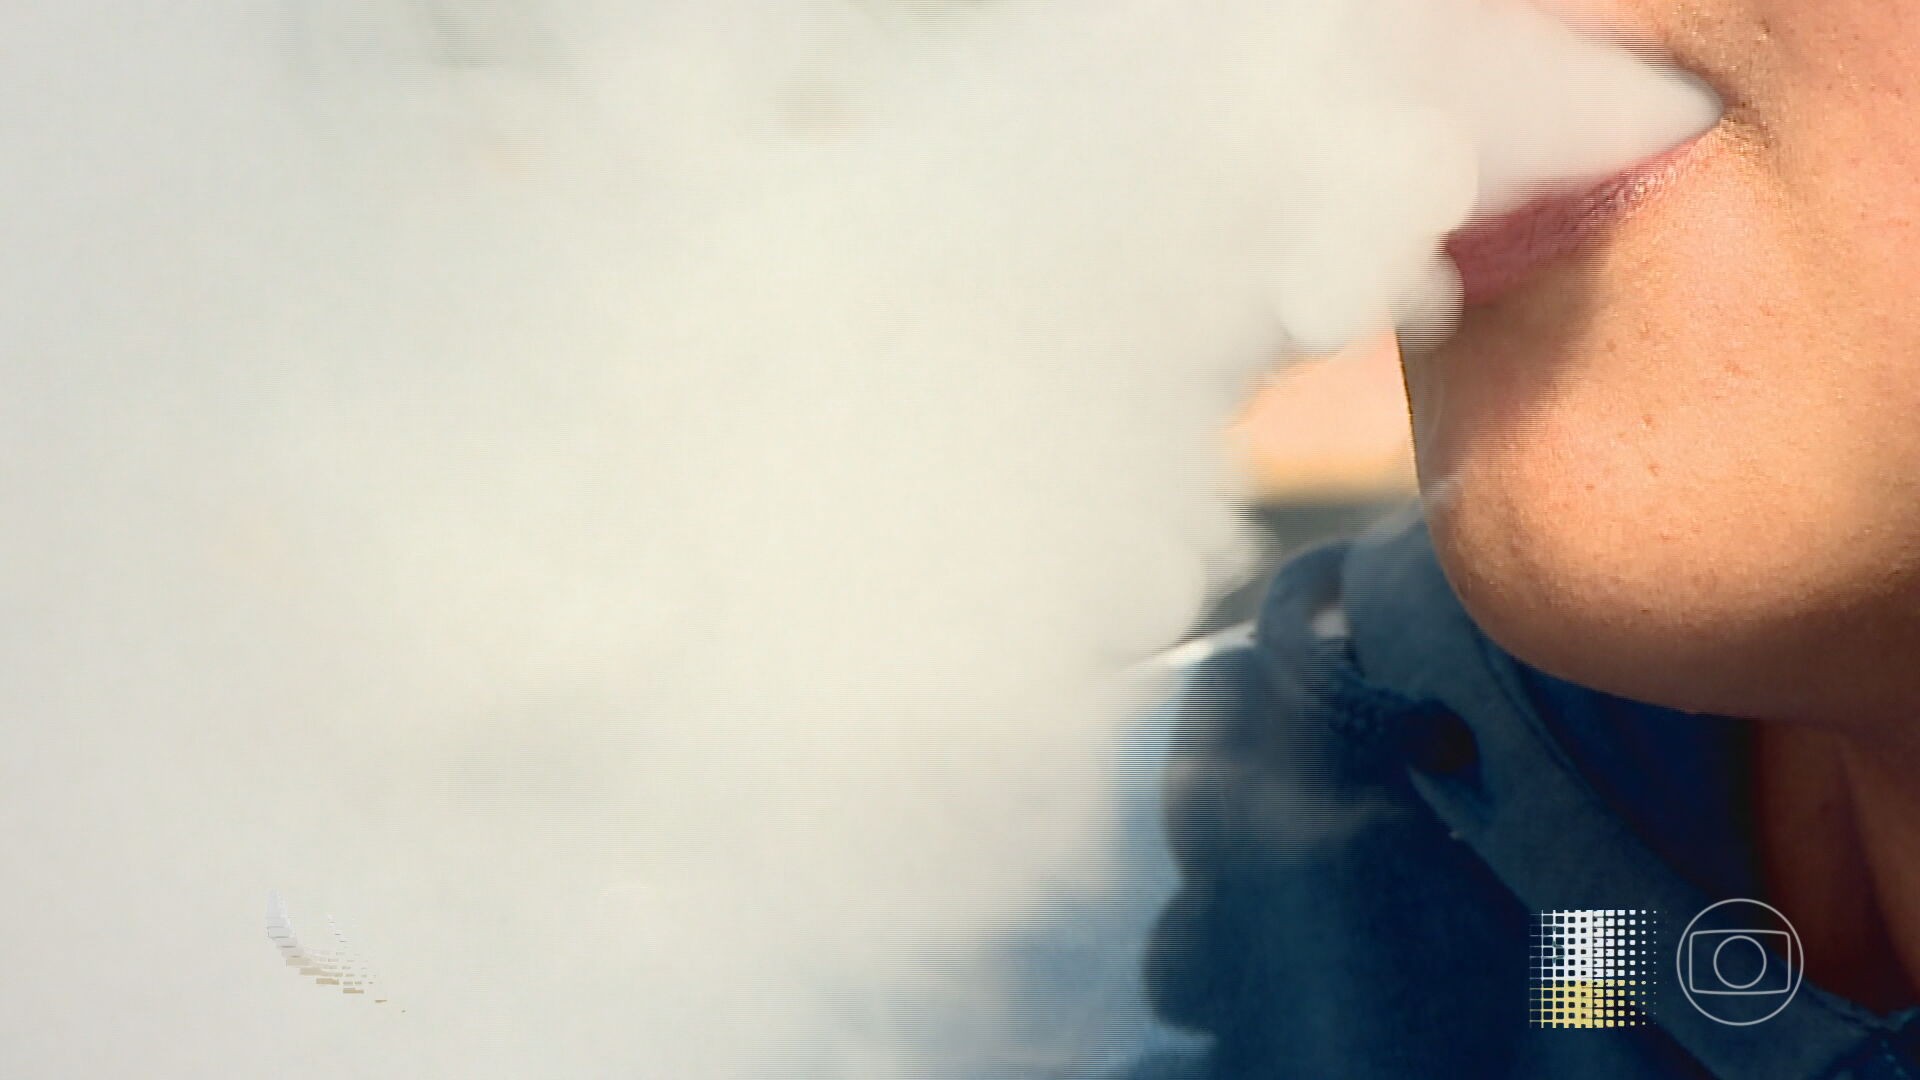 Proibidos no Brasil, cigarros eletrônicos impulsionam abertura de tabacarias no interior de SP; oncologista alerta para riscos